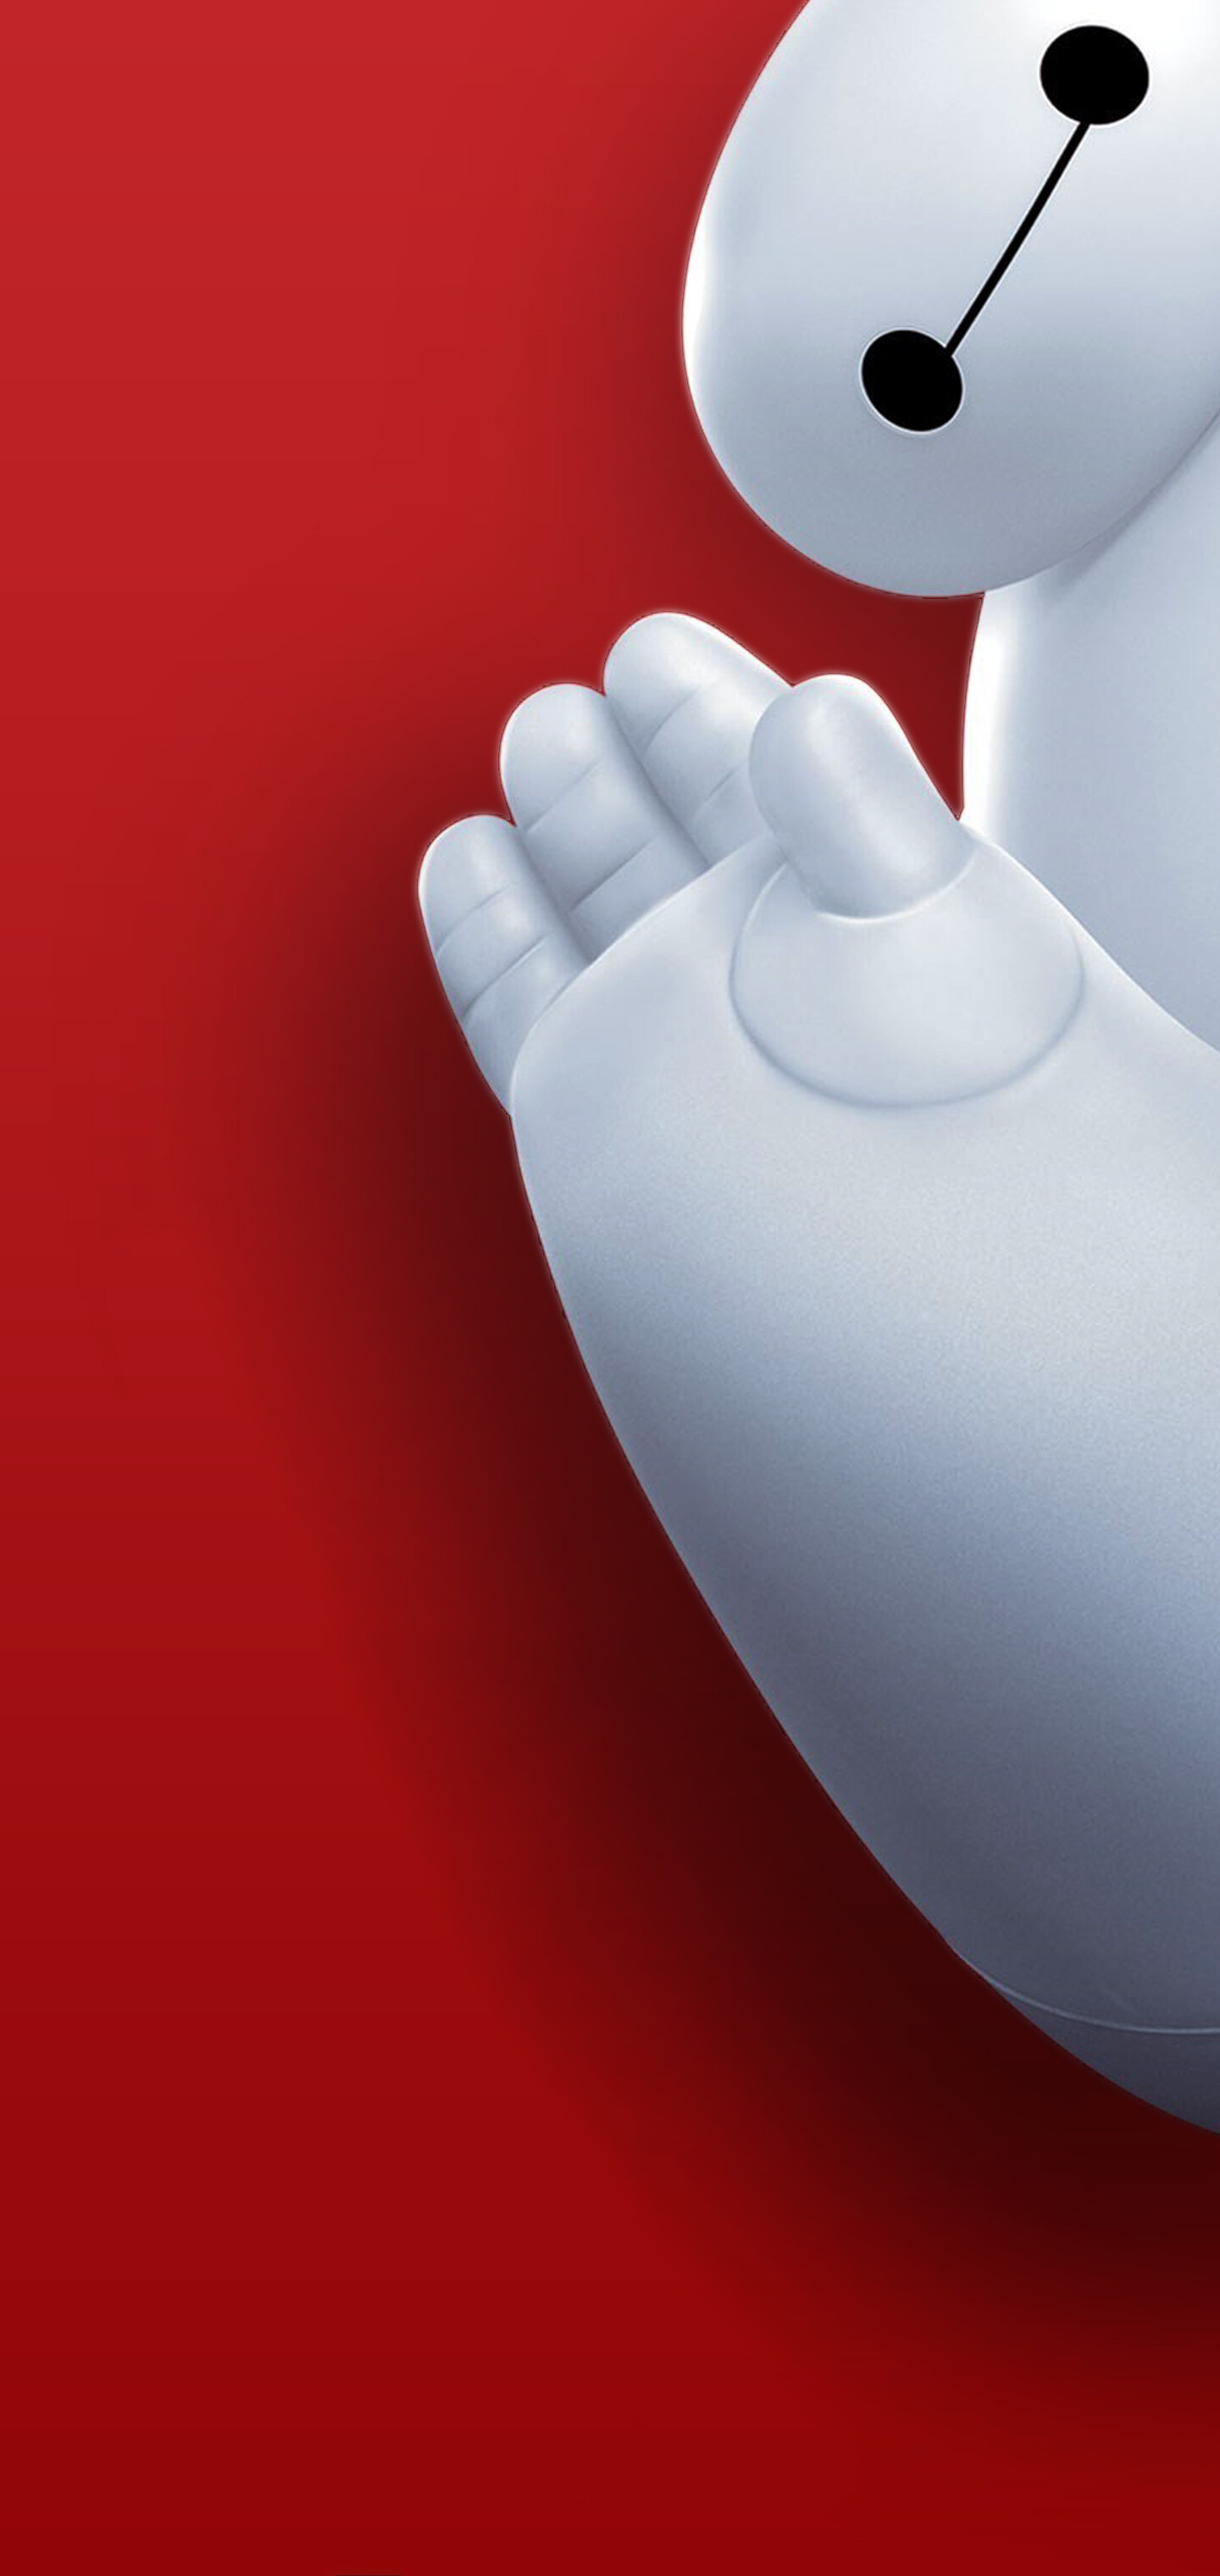 Big Hero 6: An inflatable health care robot Baymax, Minimalism. 1440x3040 HD Wallpaper.